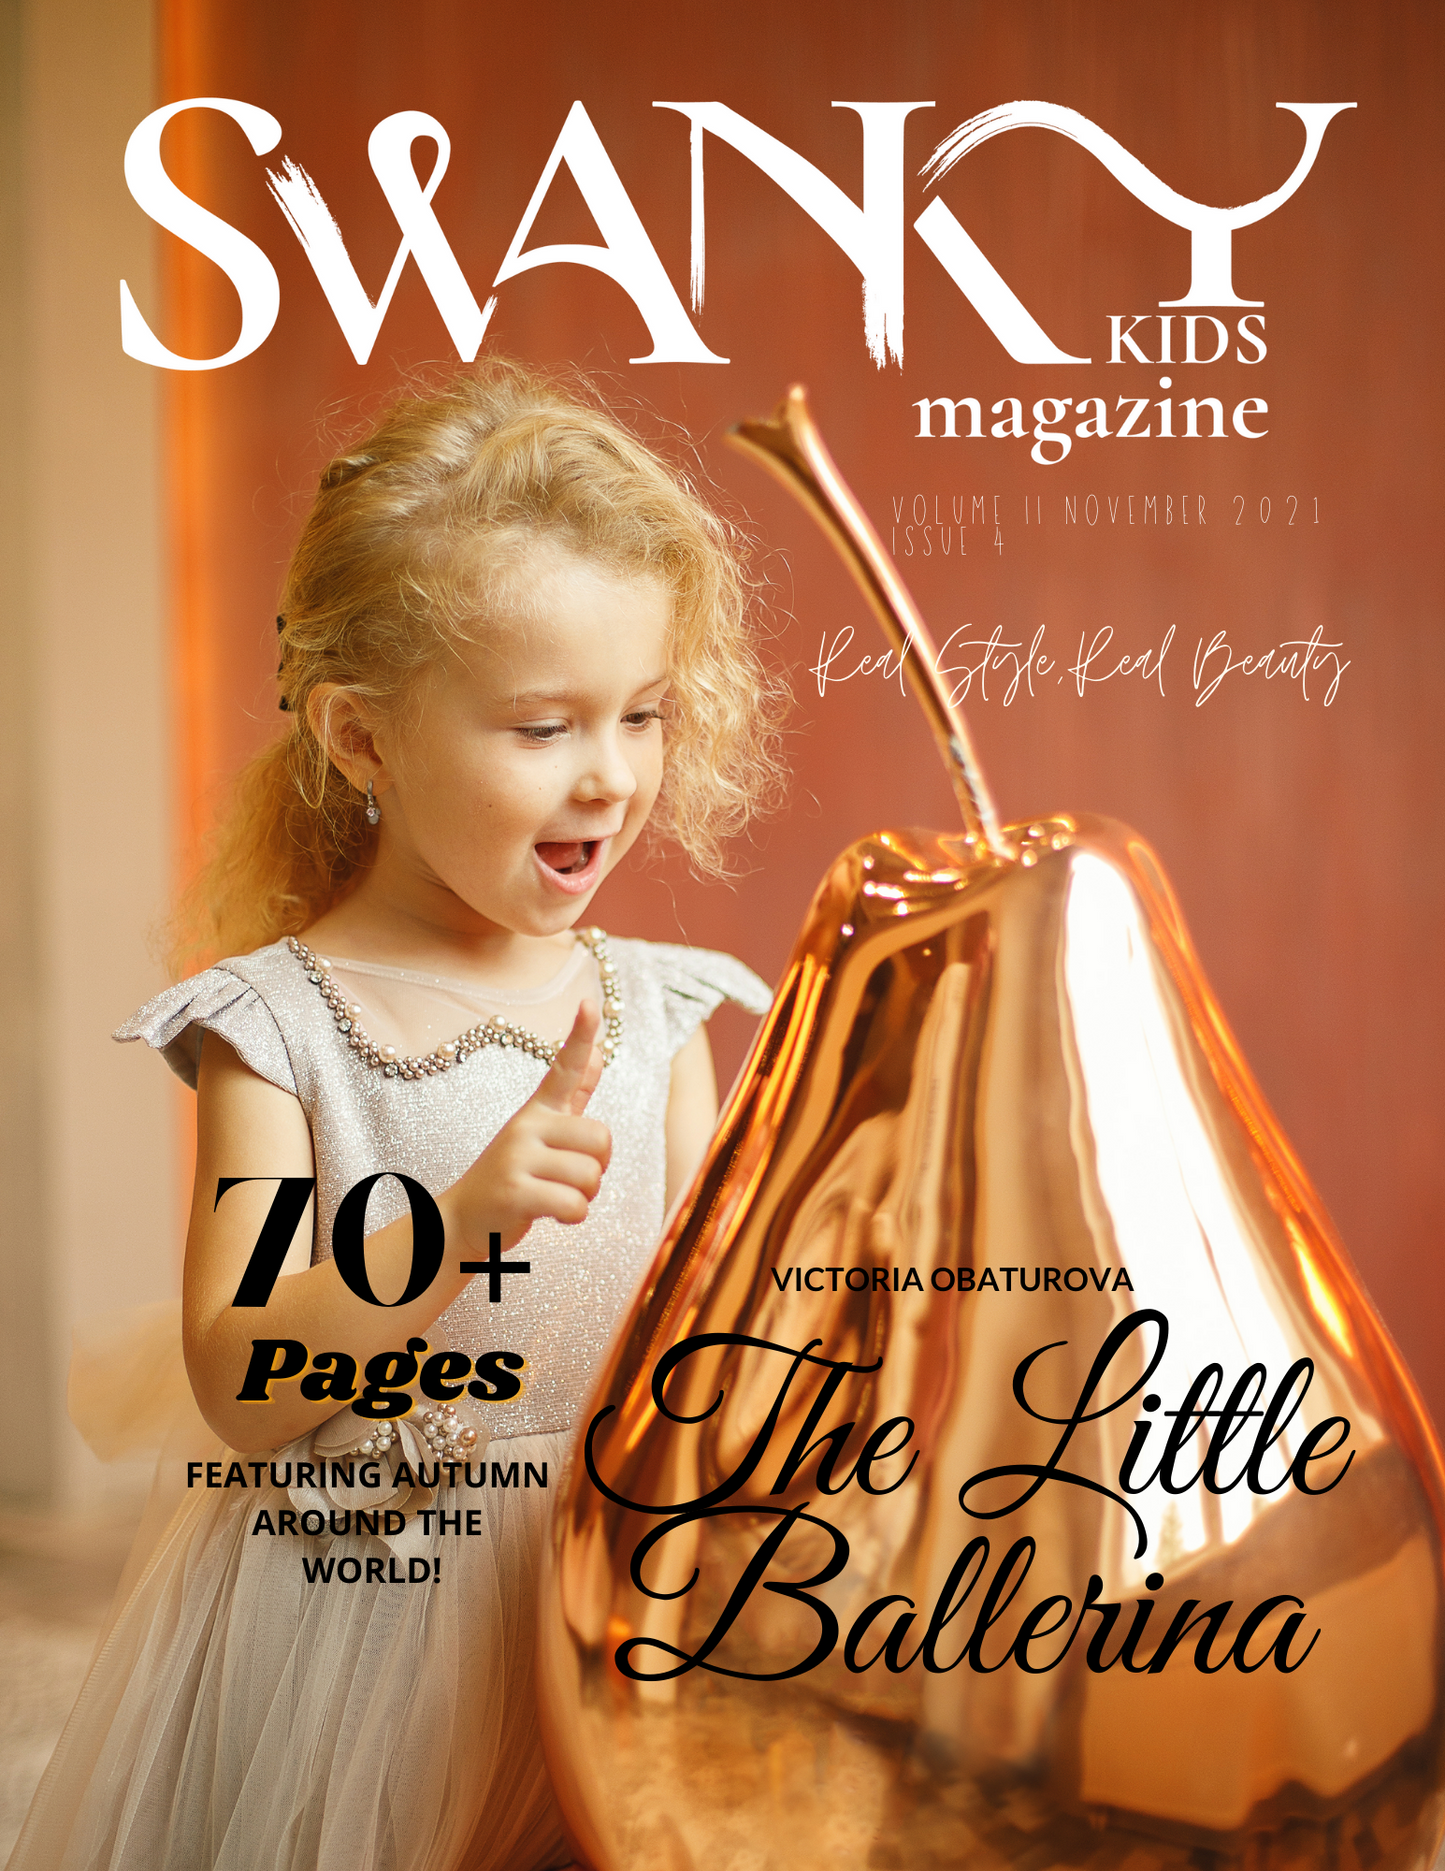 Swanky Kids Magazine VOL II Issue 4 - PRINT ISSUE